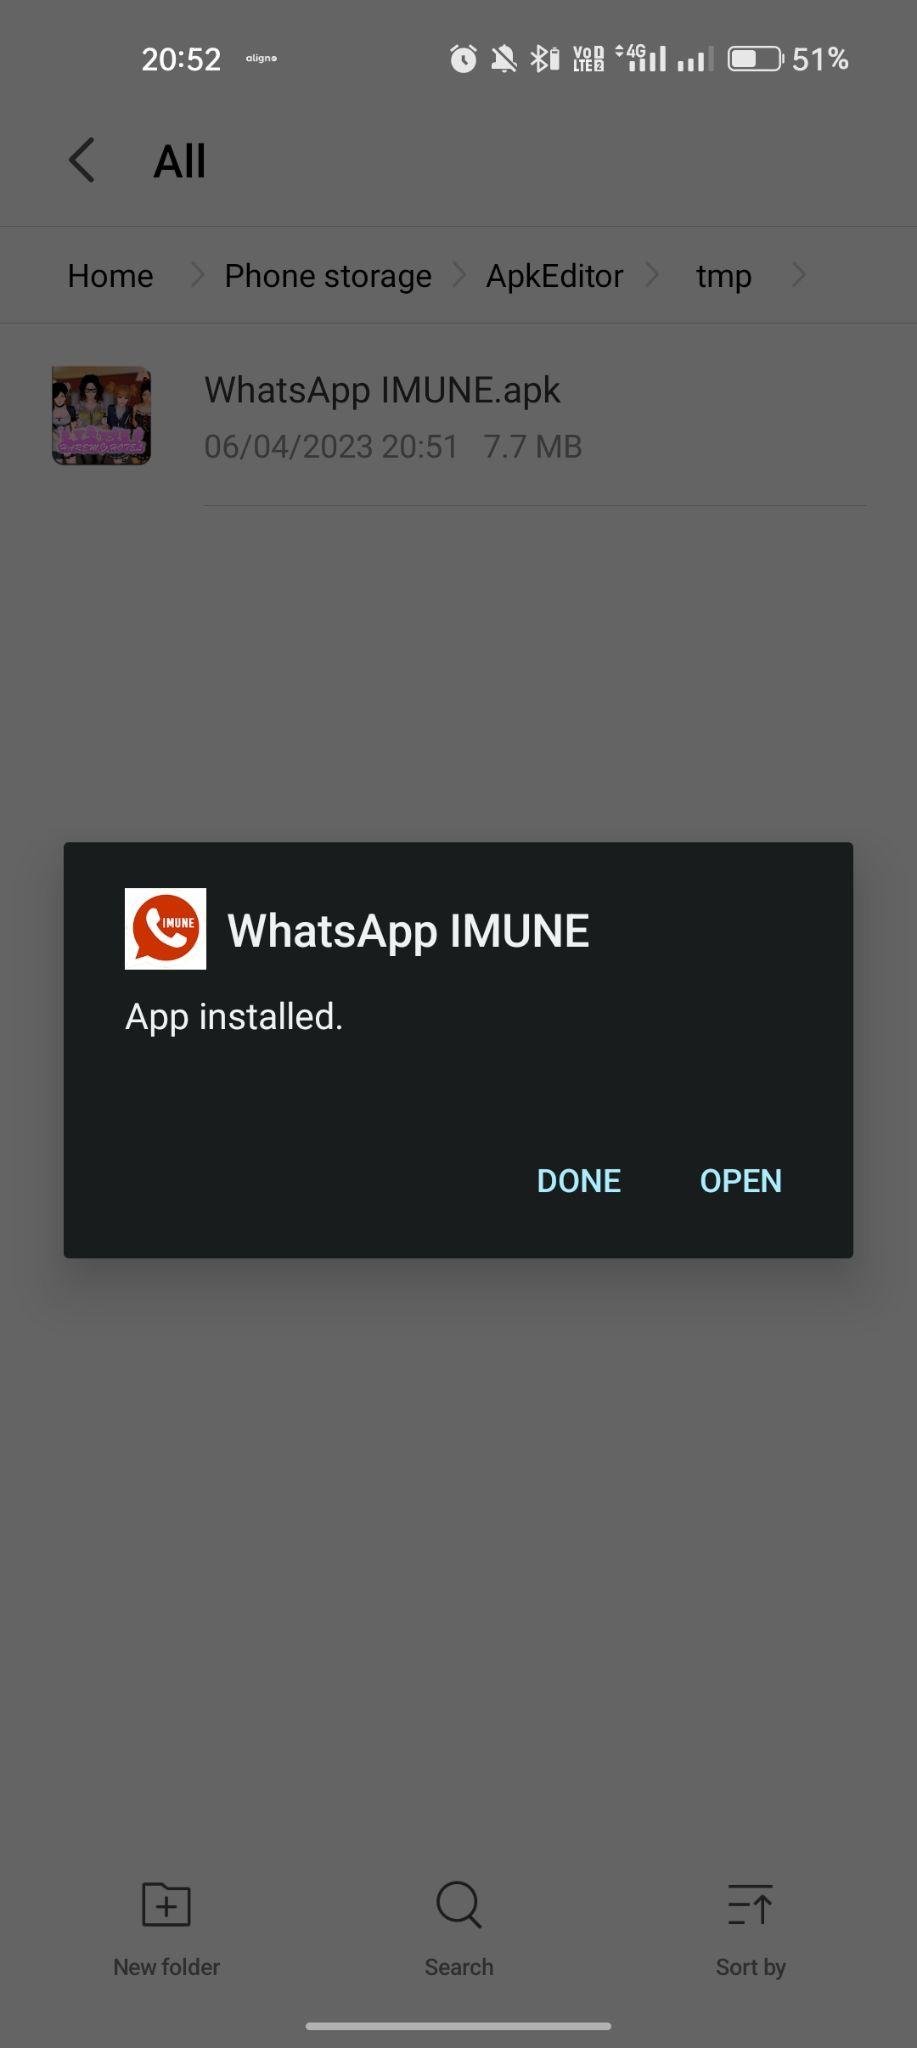 WhatsApp Imune apk installed